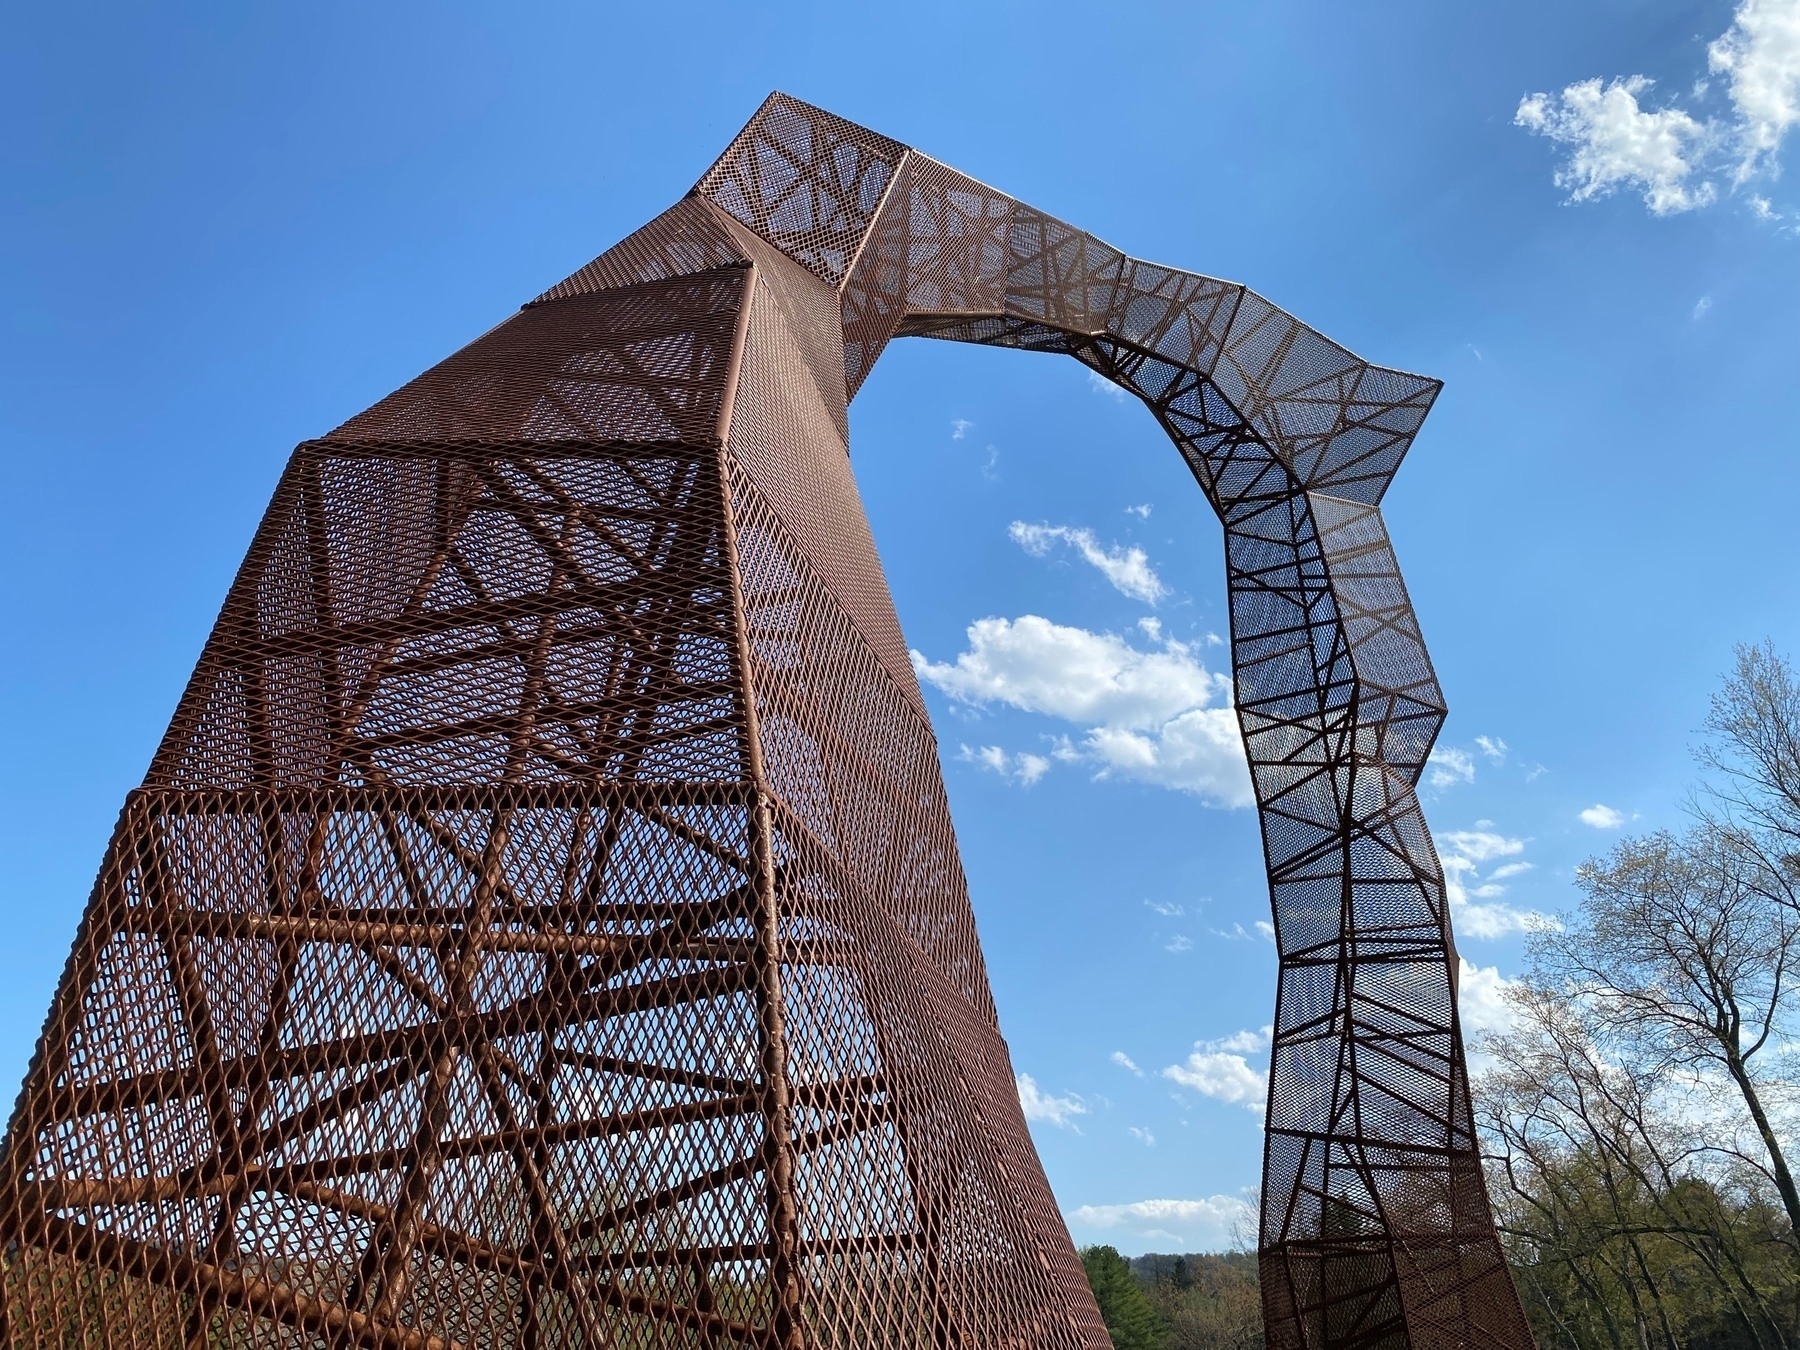 A metal latticework sculpture against a blue sky.